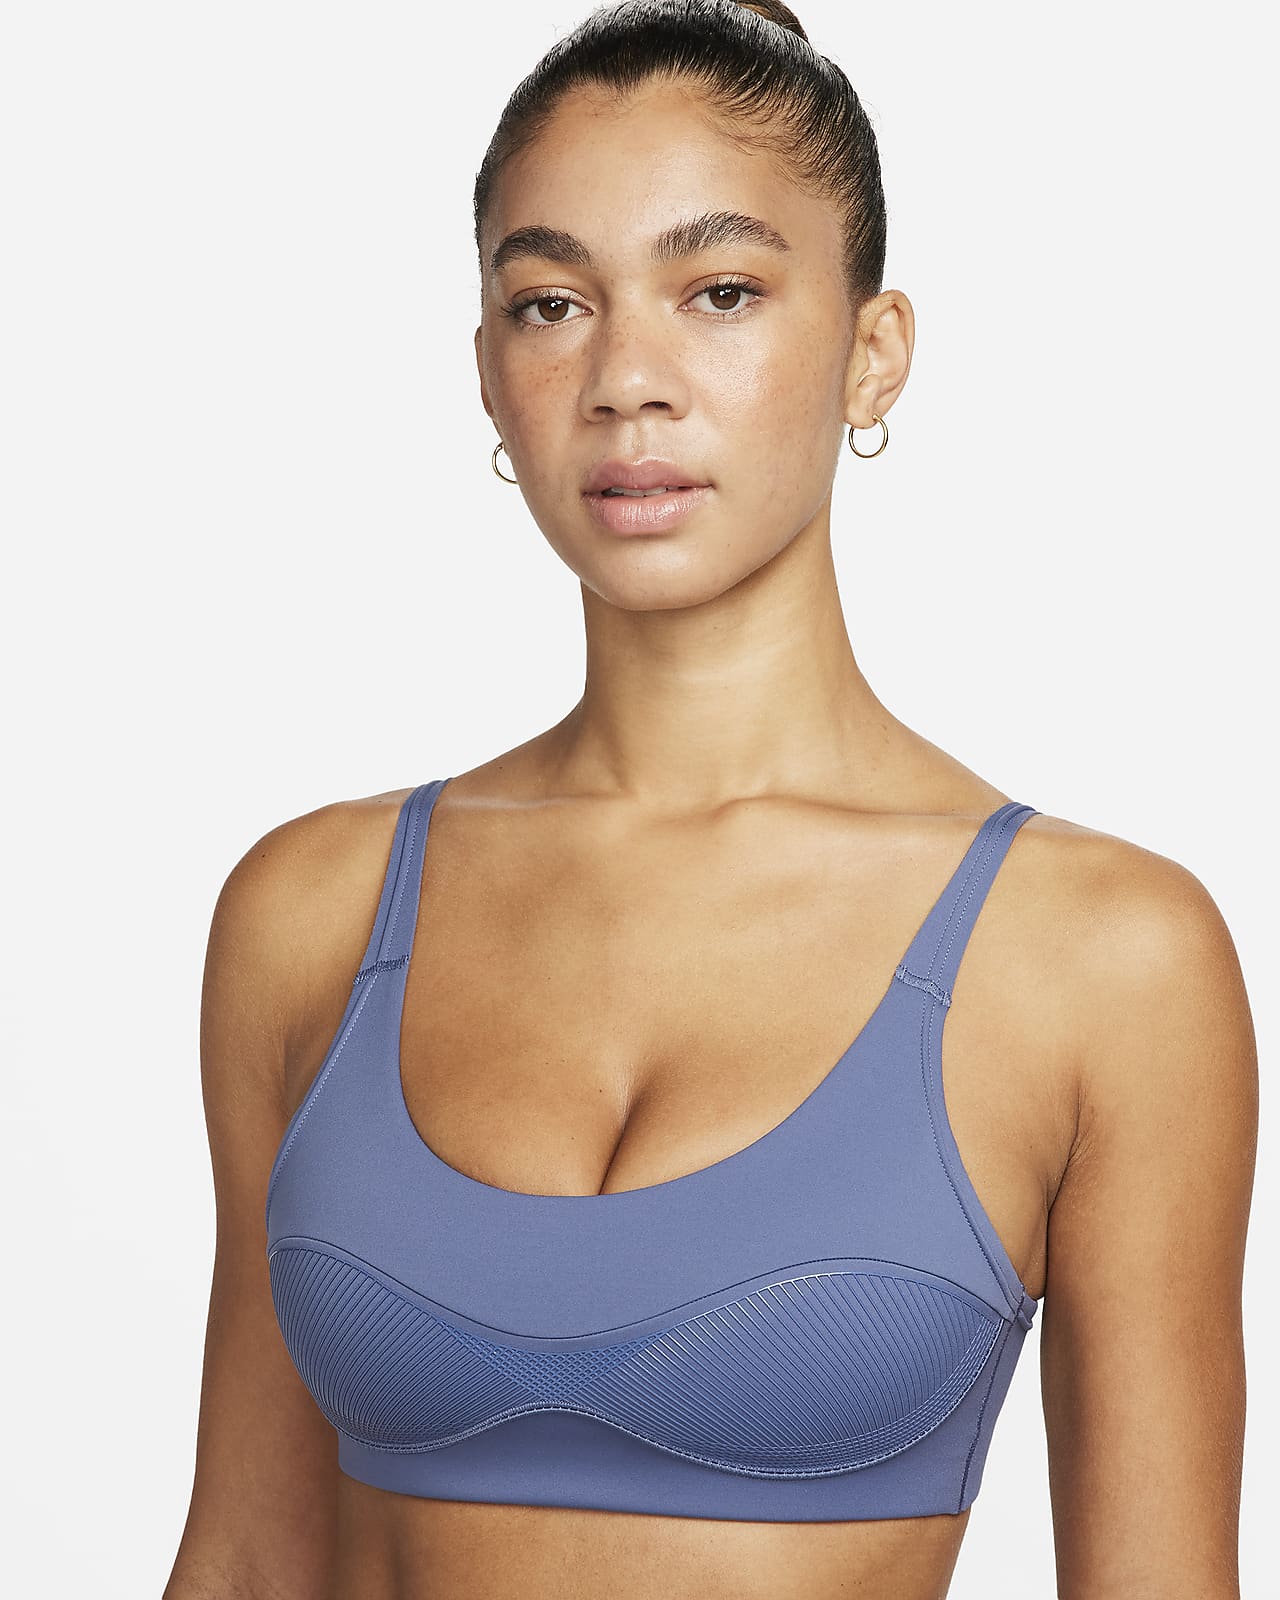 Nike Womens Medium Support Minimal Impact Sports Bra Gray XS at